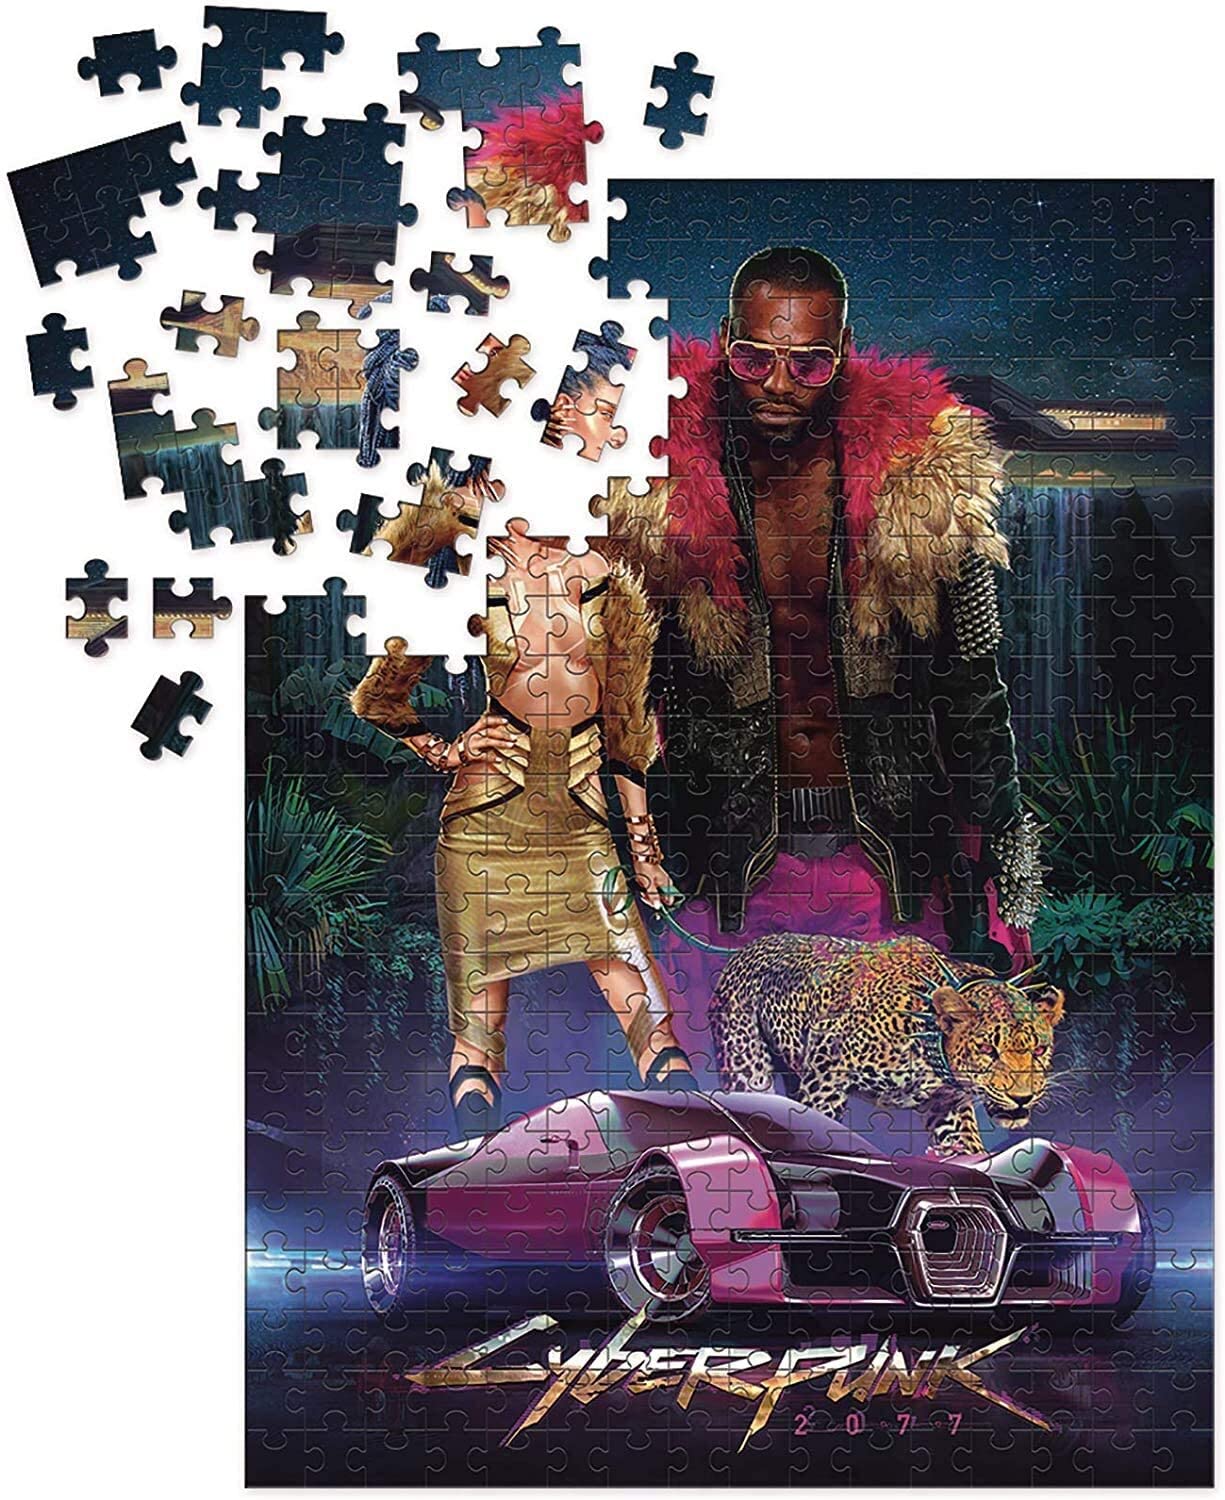 Cyberpunk 2077 Neokitsch, 1000 Pieces Puzzle (Clearance)